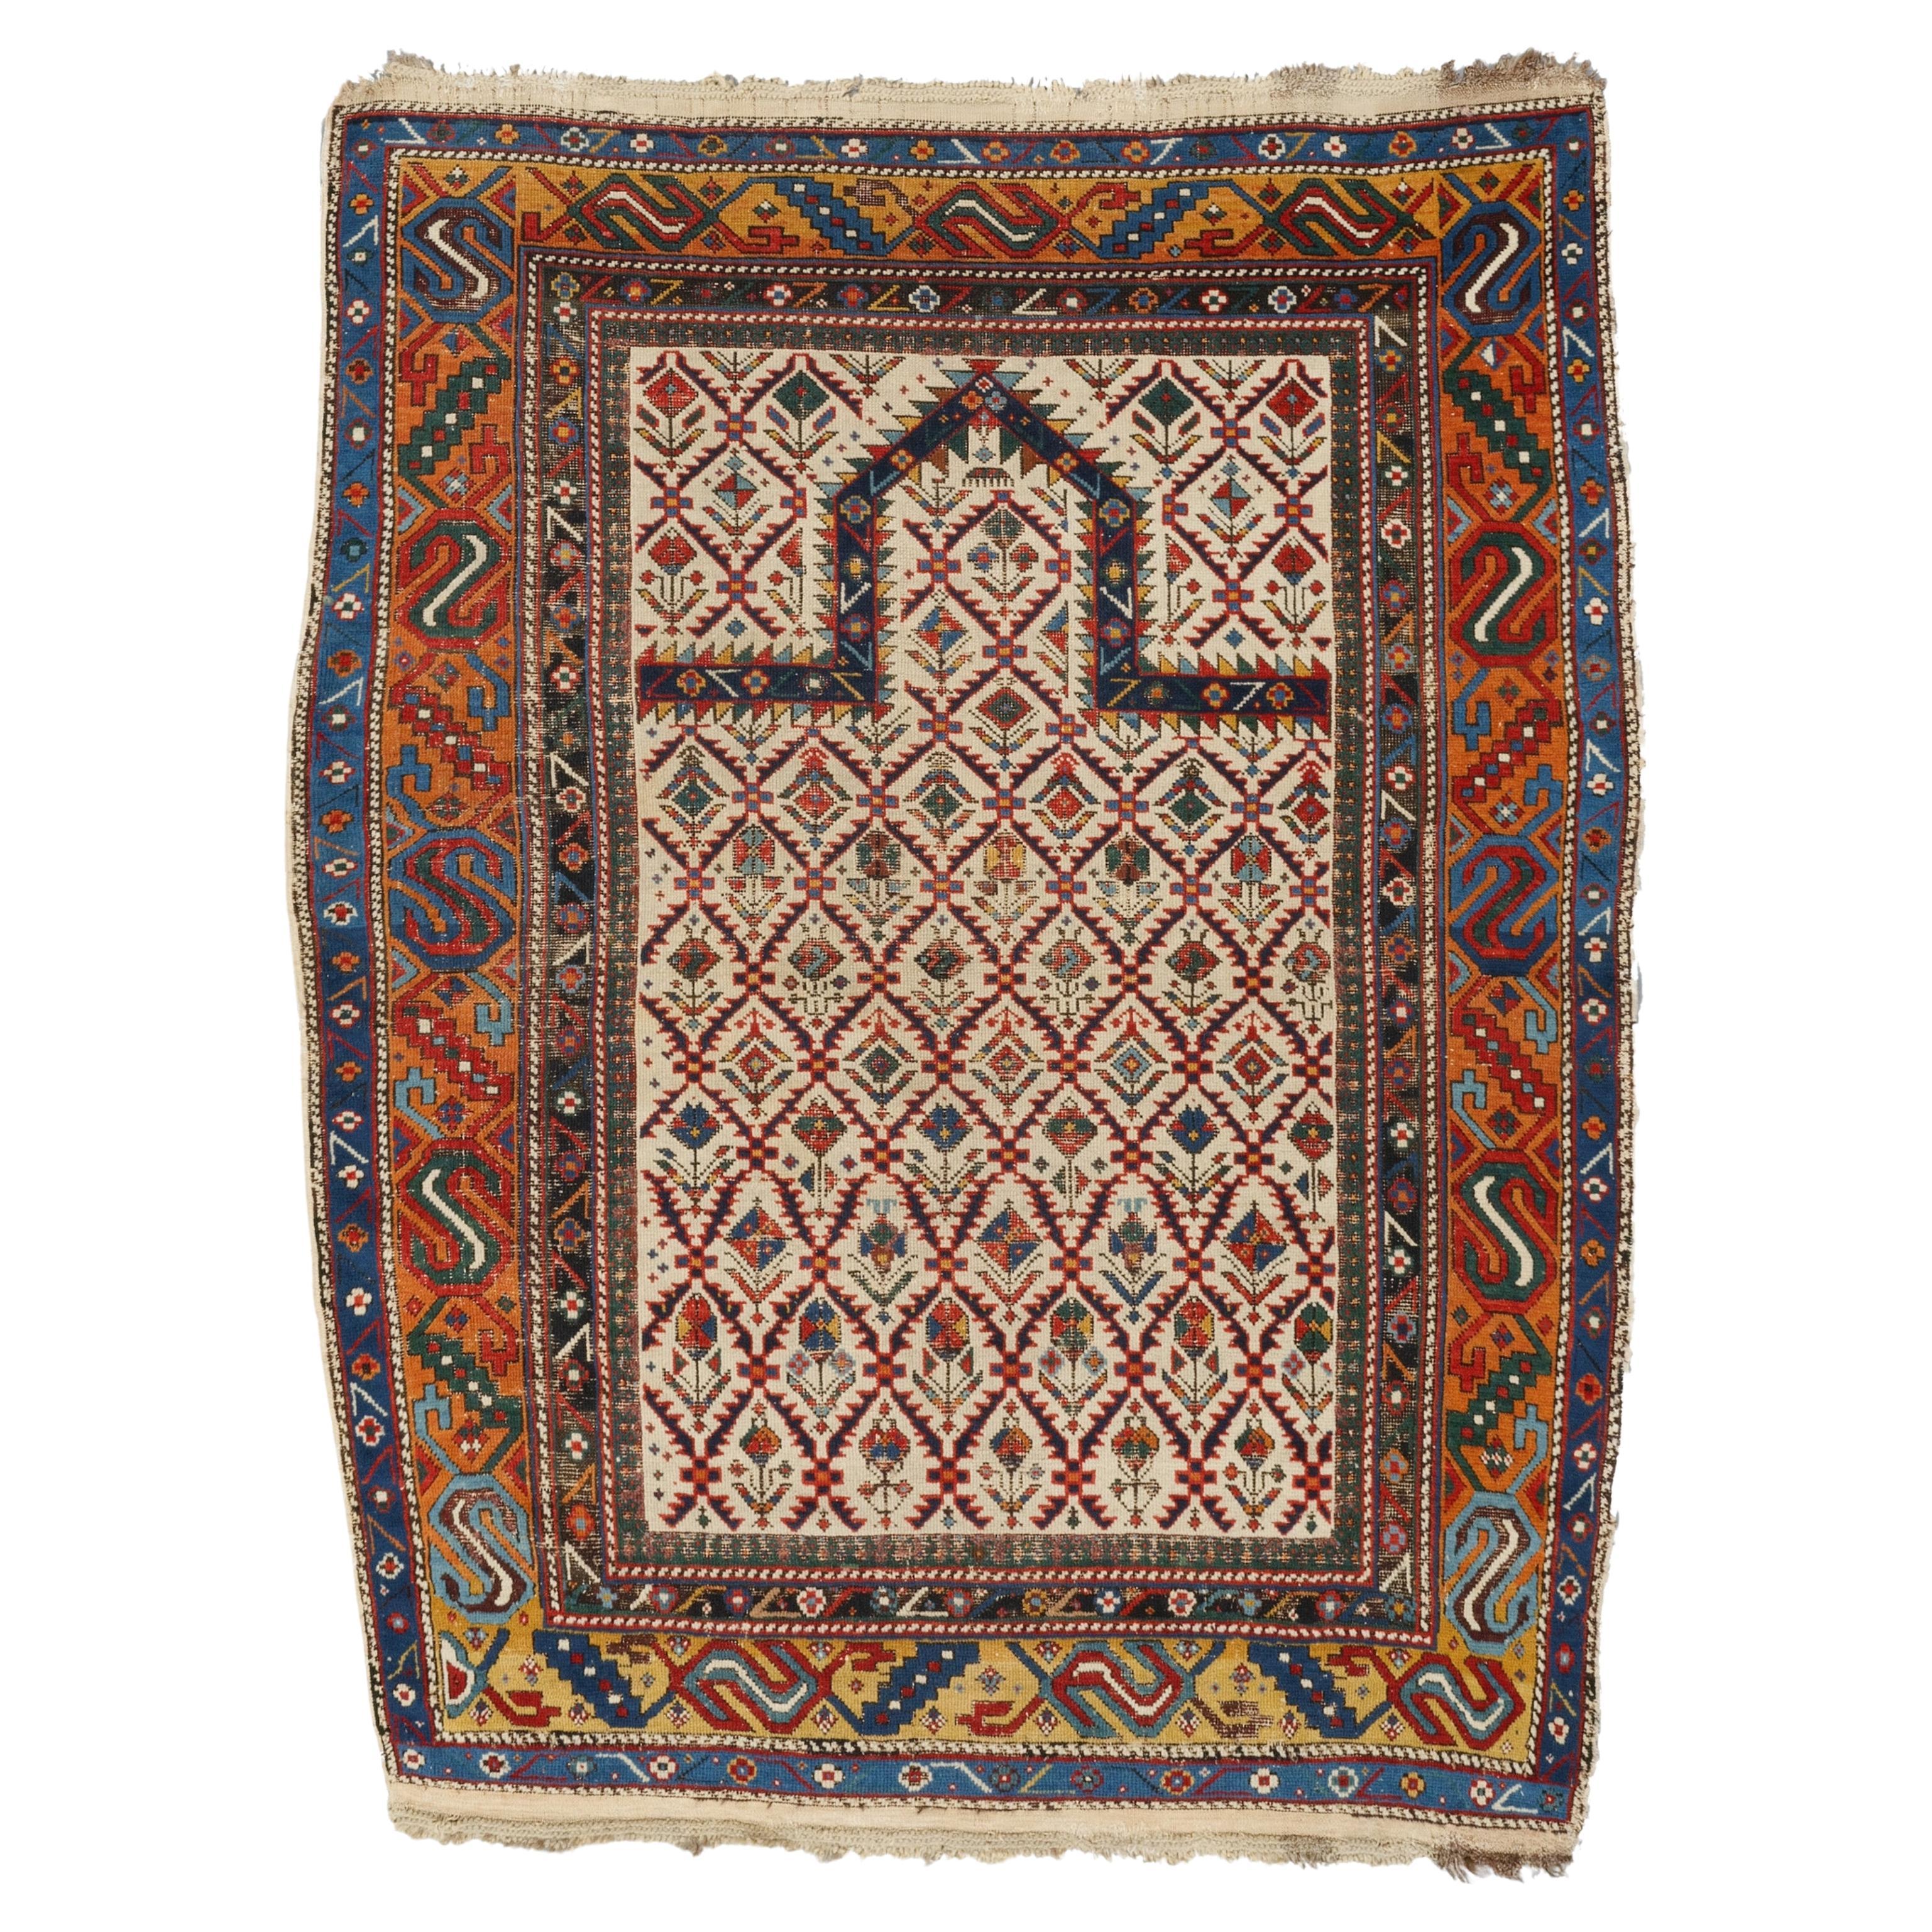 Antique Shirvan Prayer Rug - Late of the 19th Century Shirvan Rug, Antique Rug